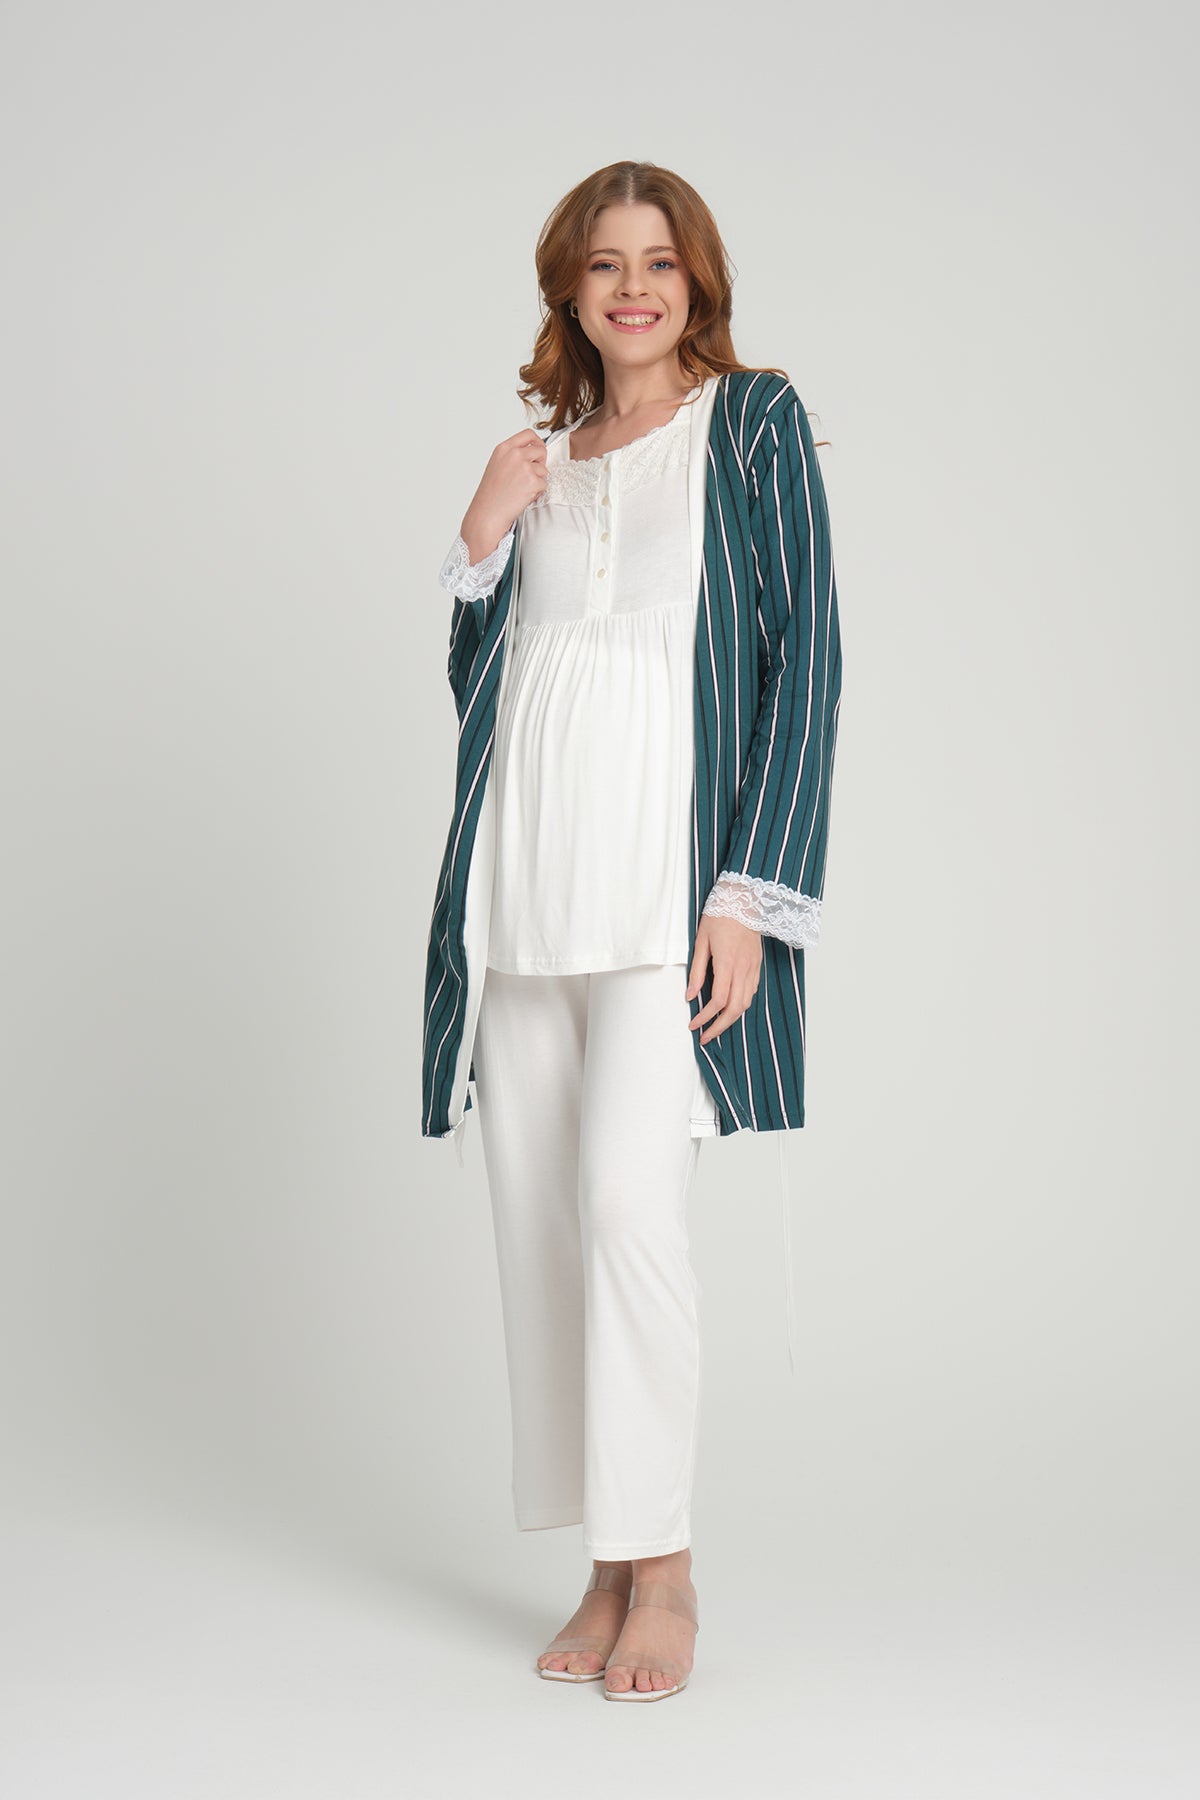 Shopymommy 2356 3-Pieces Maternity & Nursing Pajamas With Striped Robe Ecru